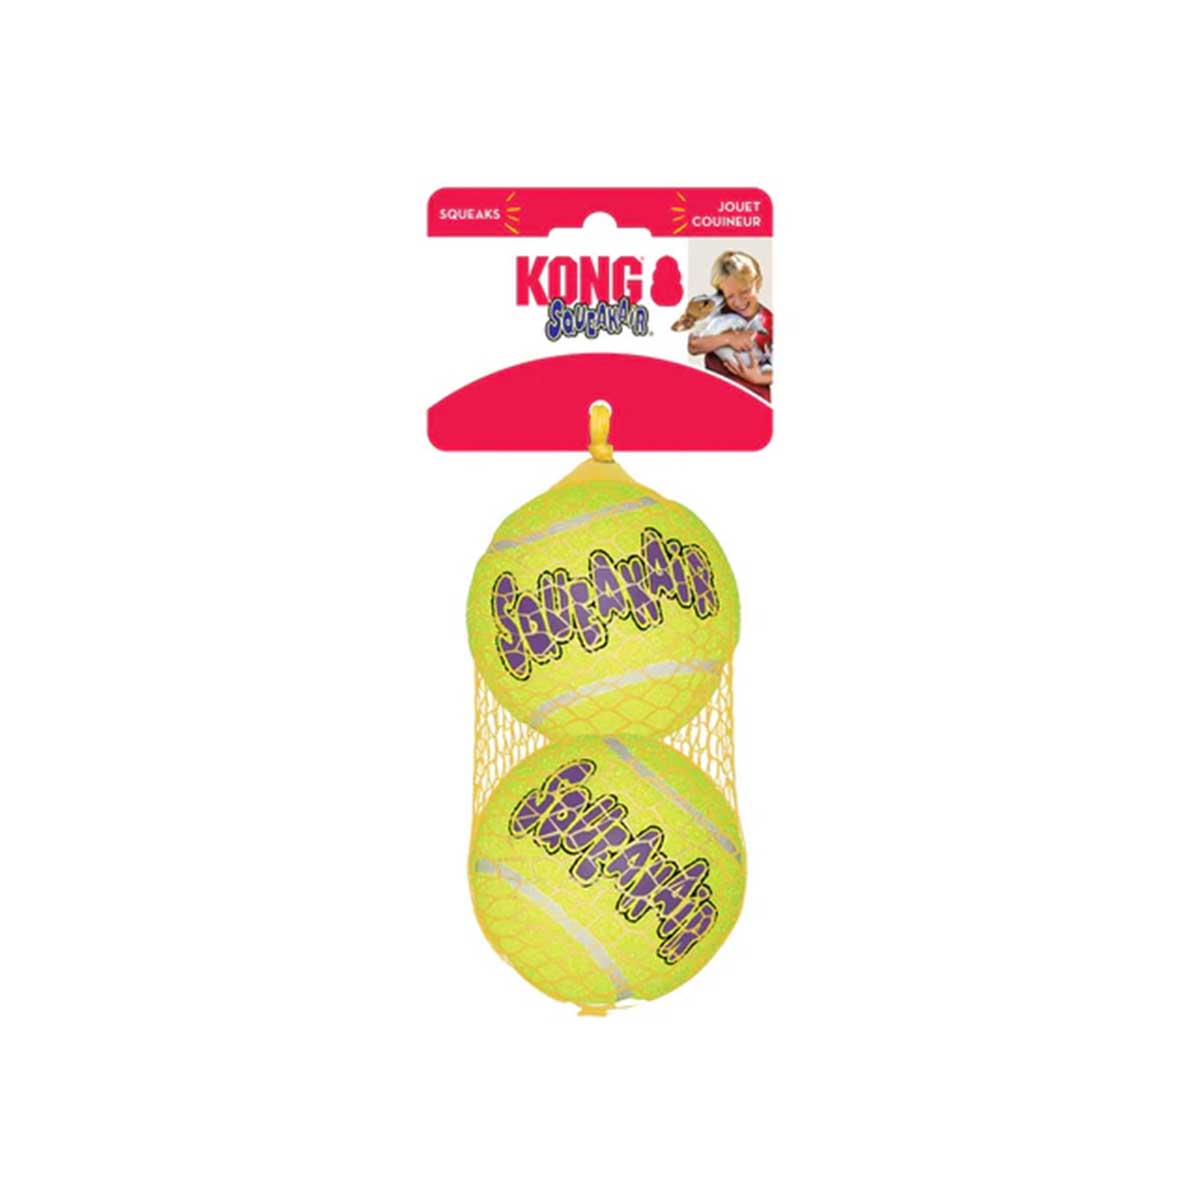 Kong SqueakAir Tennis Balls - Large 2 Pack